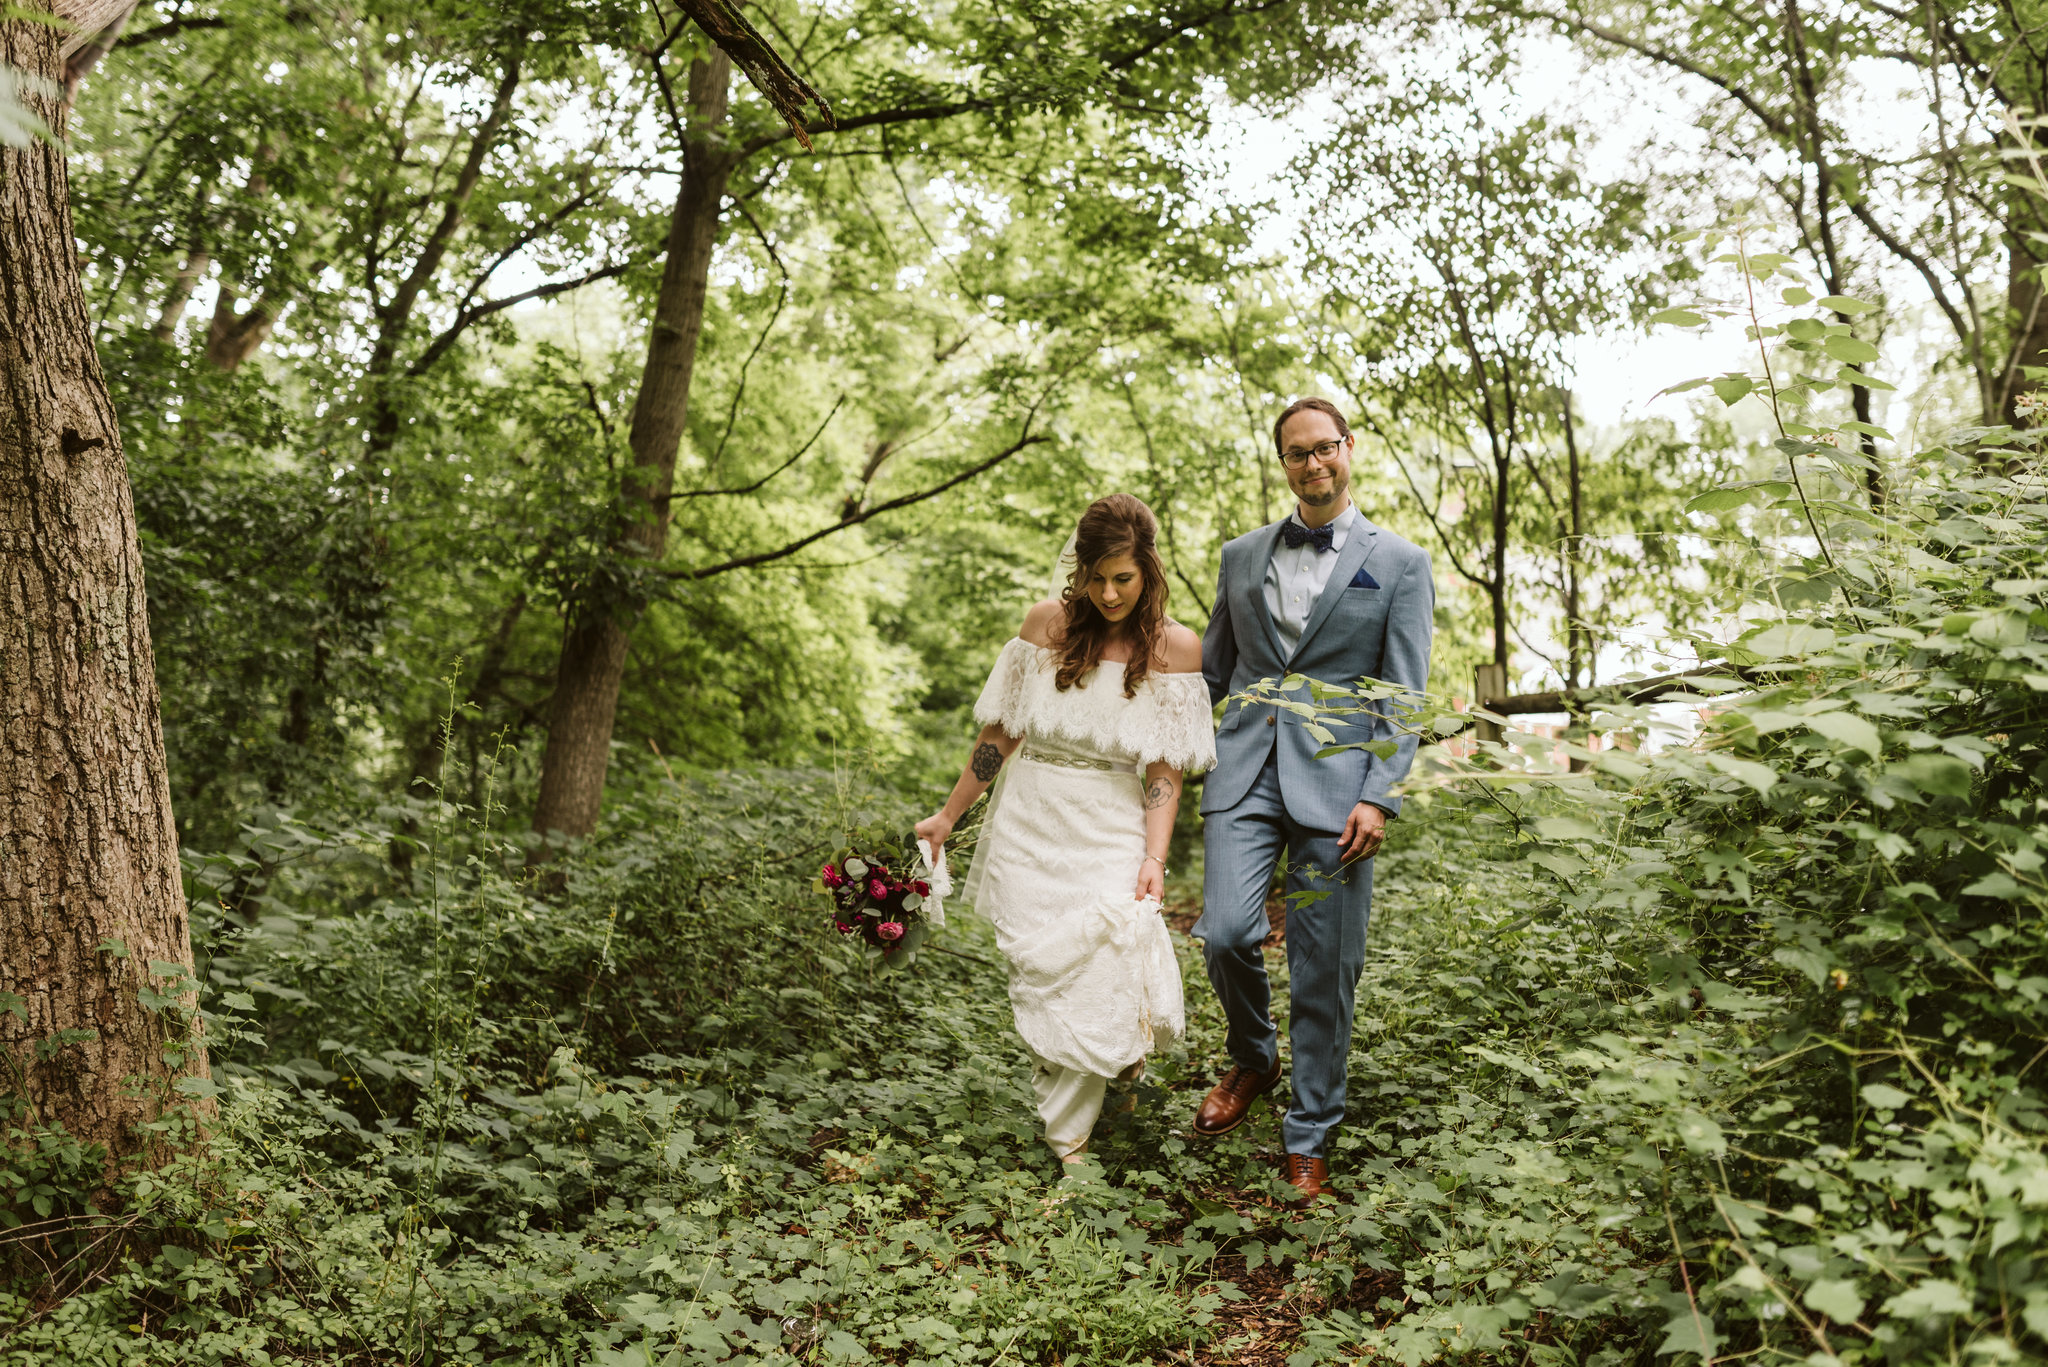  Annapolis, Quaker Wedding, Maryland Wedding Photographer, Intimate, Small Wedding, Vintage, DIY, Bride and Groom Walking through Woods 